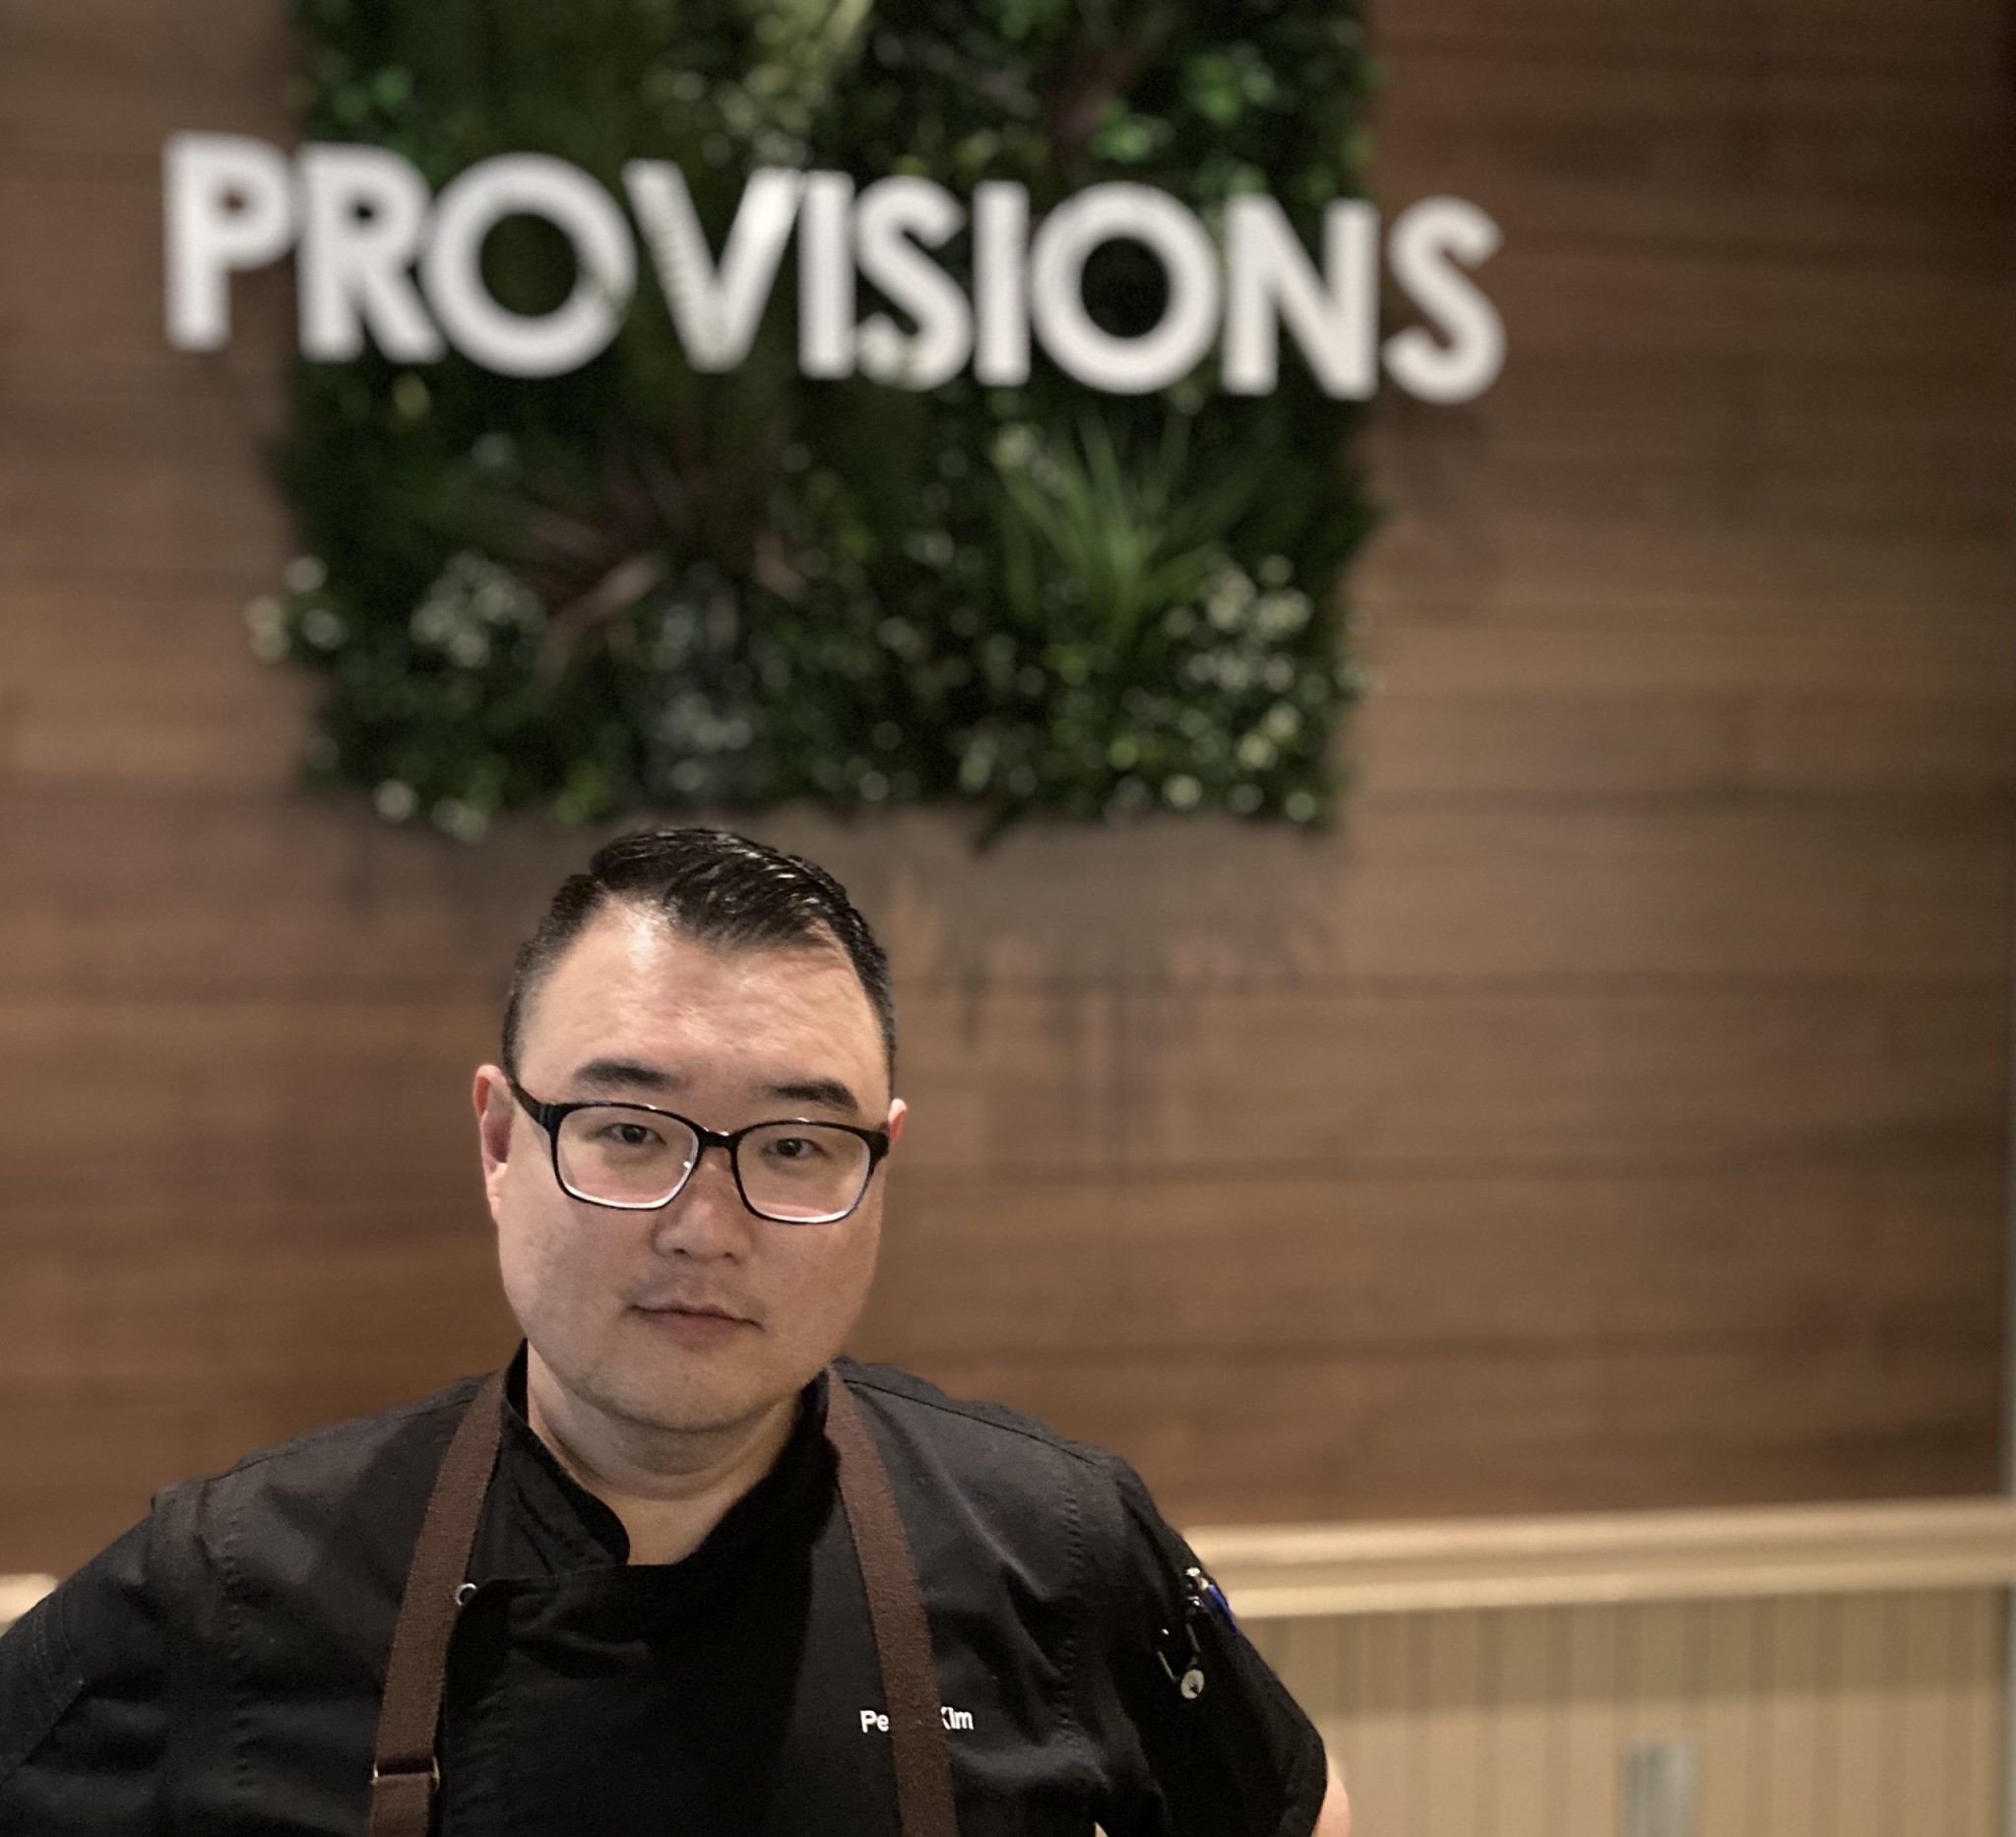 Peter Kim: The Man Behind the Menu at Seaside Provisions